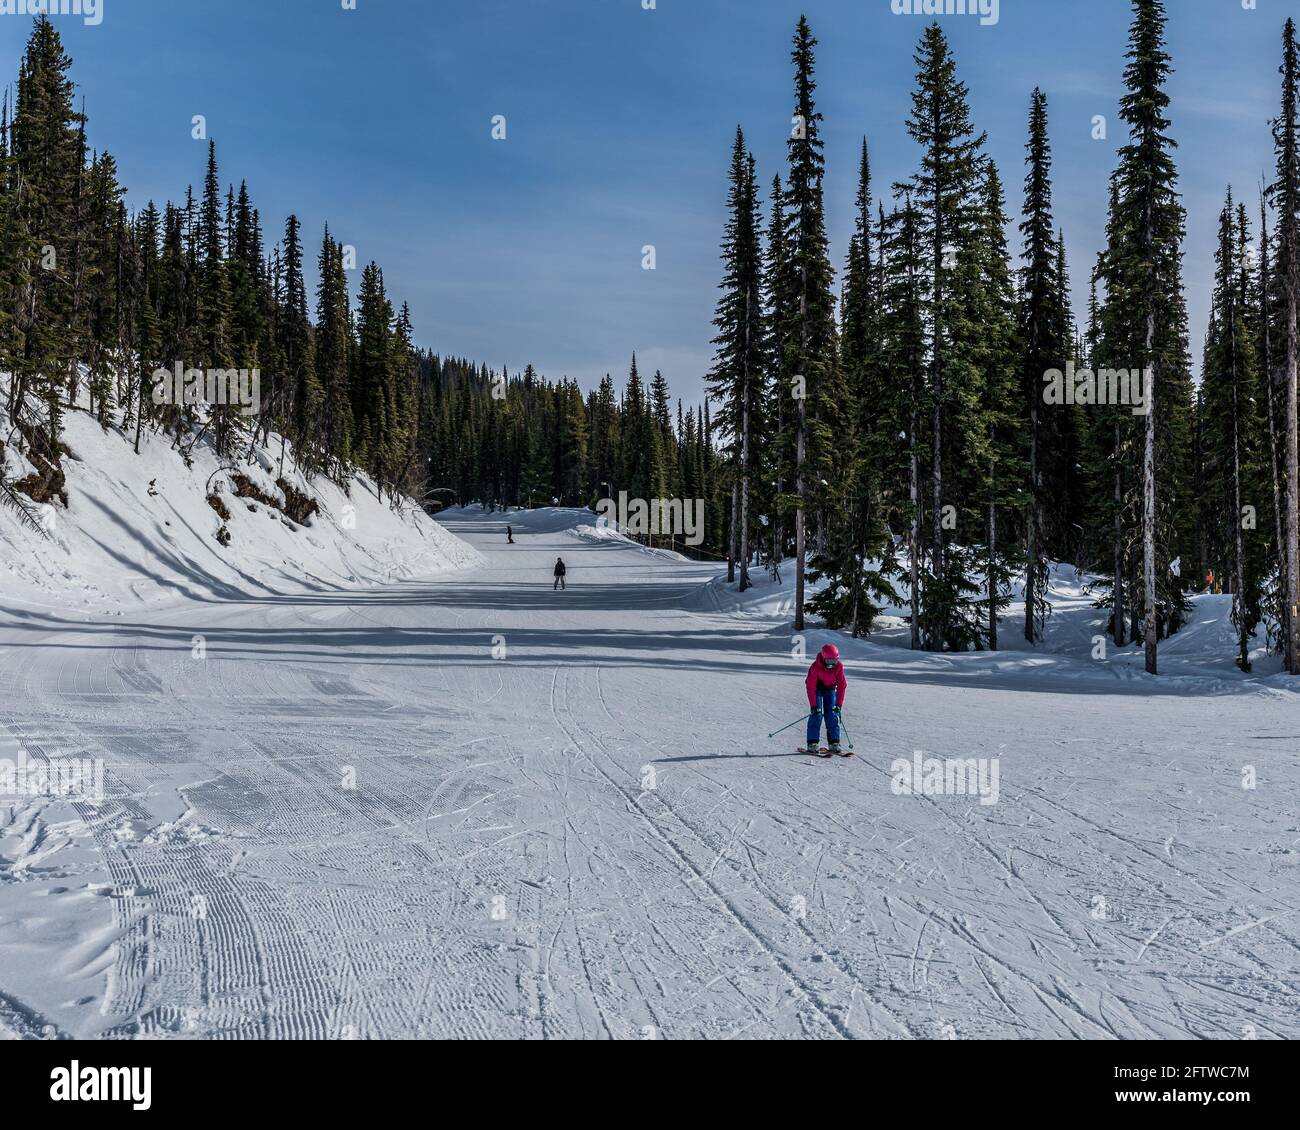 REVELSTOKE, CANADA - MARCH 17, 2021: people skiing downhill on newly-fallen snow ski resort Stock Photo